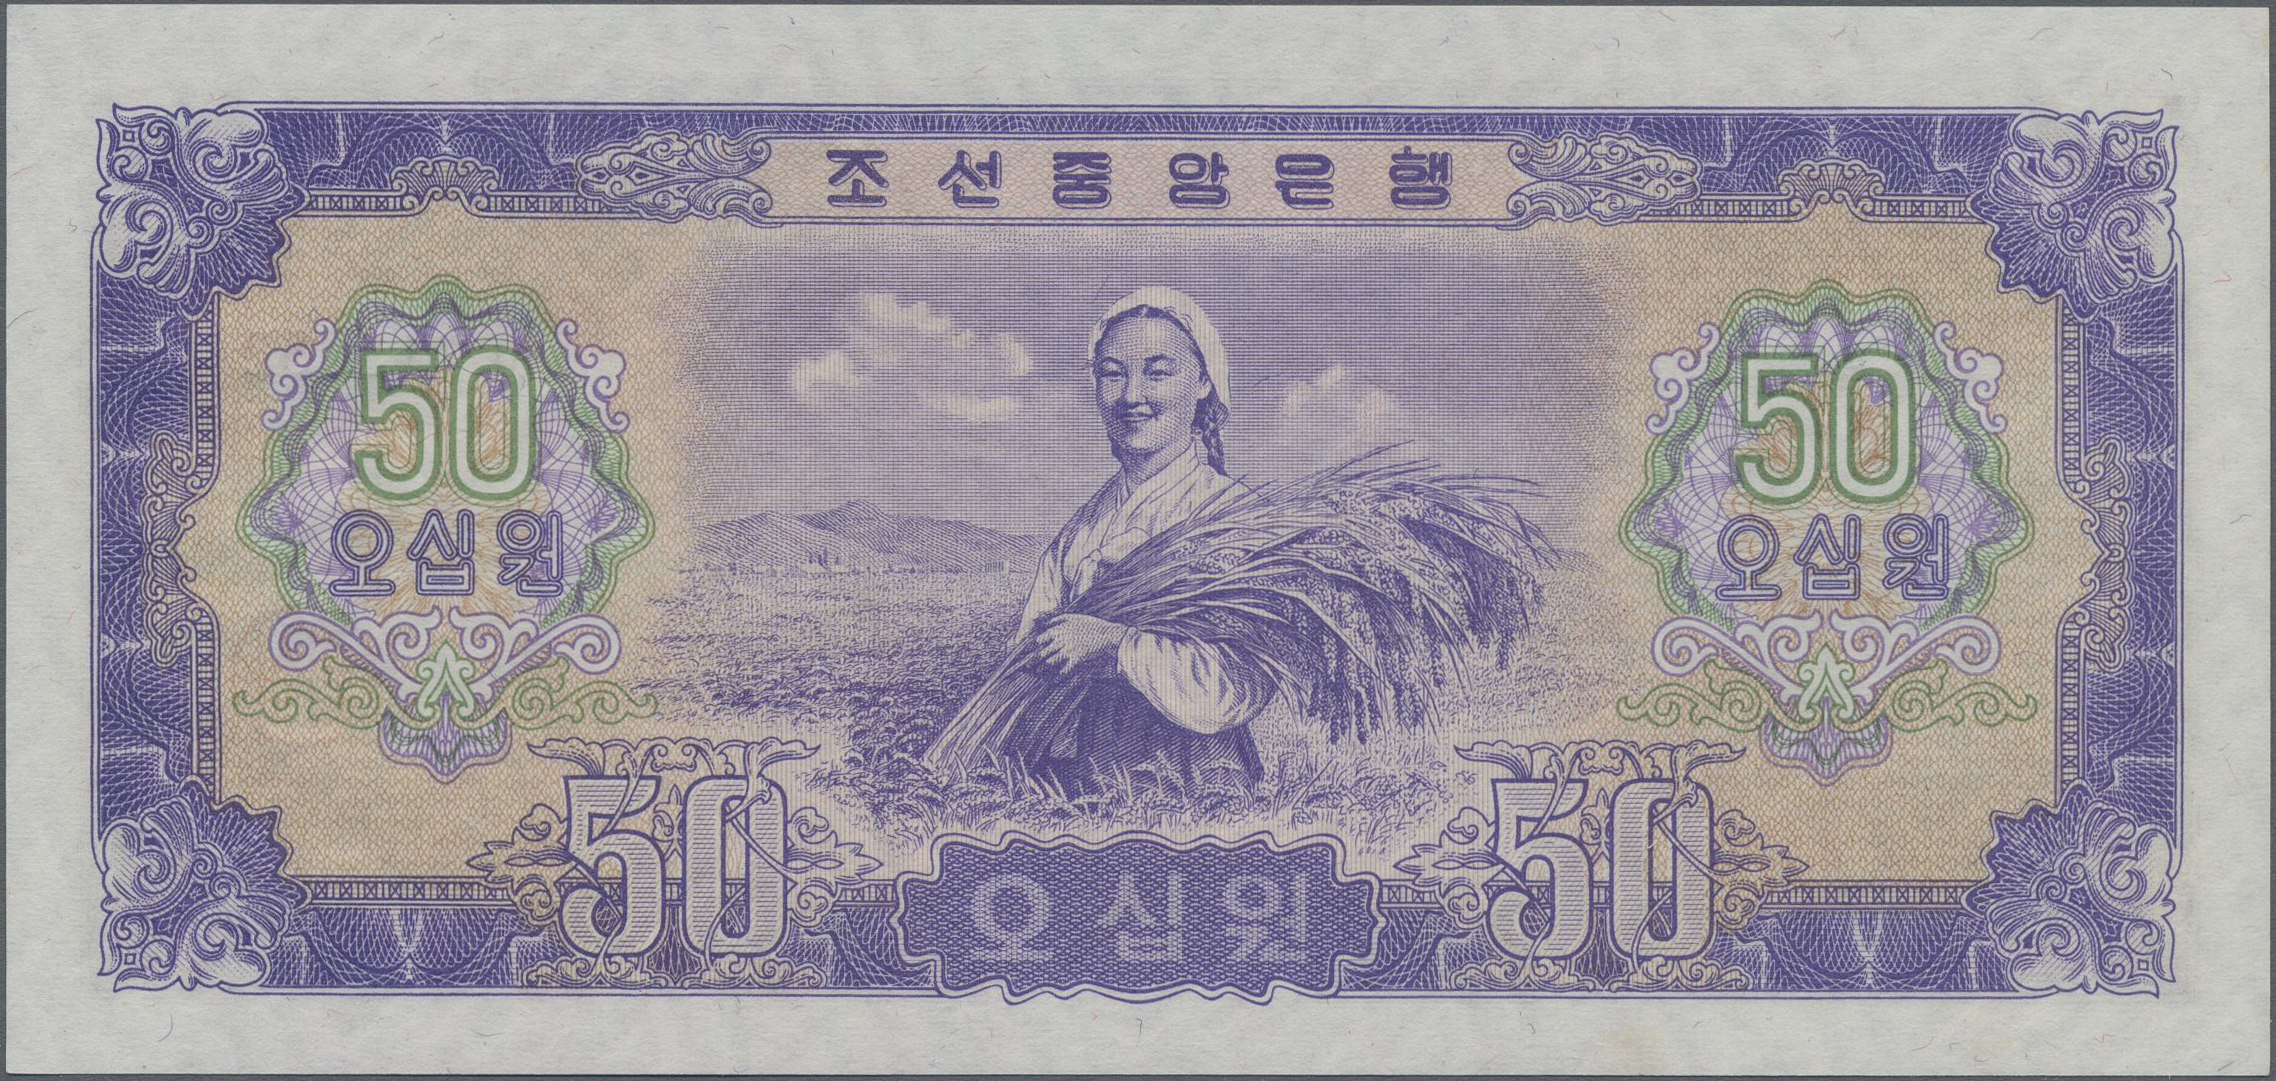 Lot 00354 - North Korea / Banknoten  -  Auktionshaus Christoph Gärtner GmbH & Co. KG 55th AUCTION - Day 1